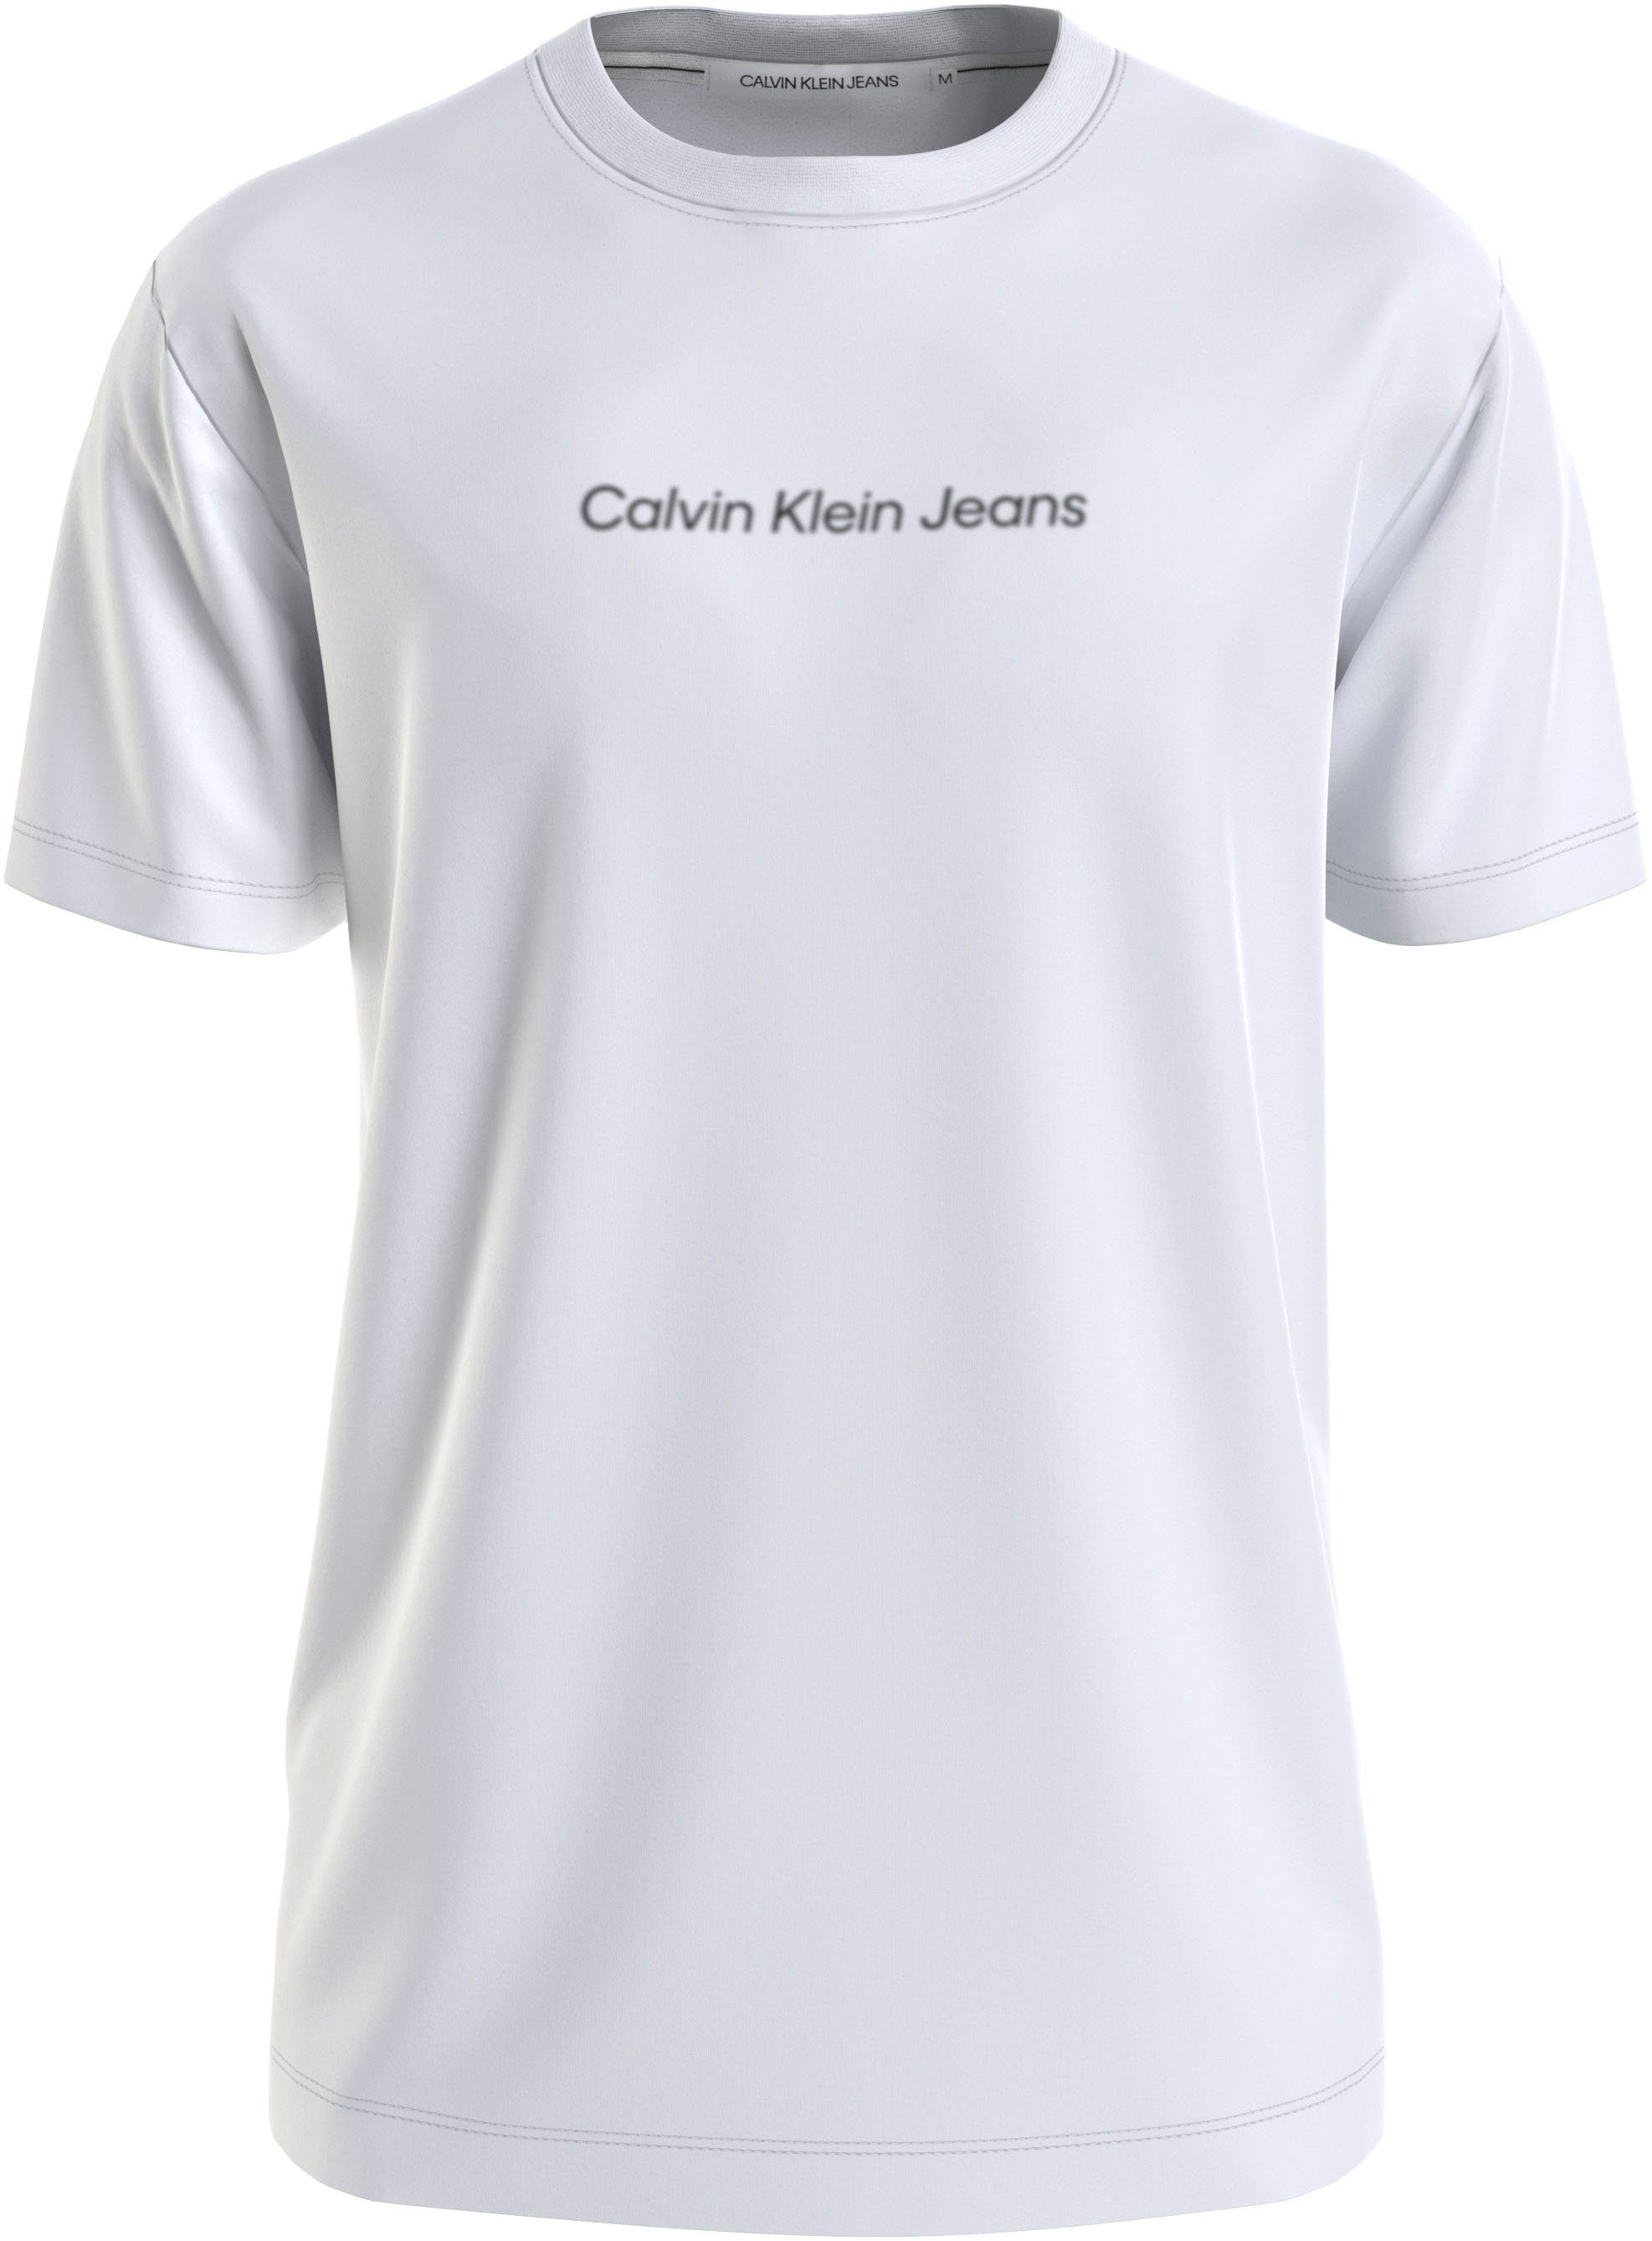 CK Klein TEE White T-Shirt Bright Jeans LOGO Plus PLUS Calvin MIRRORED